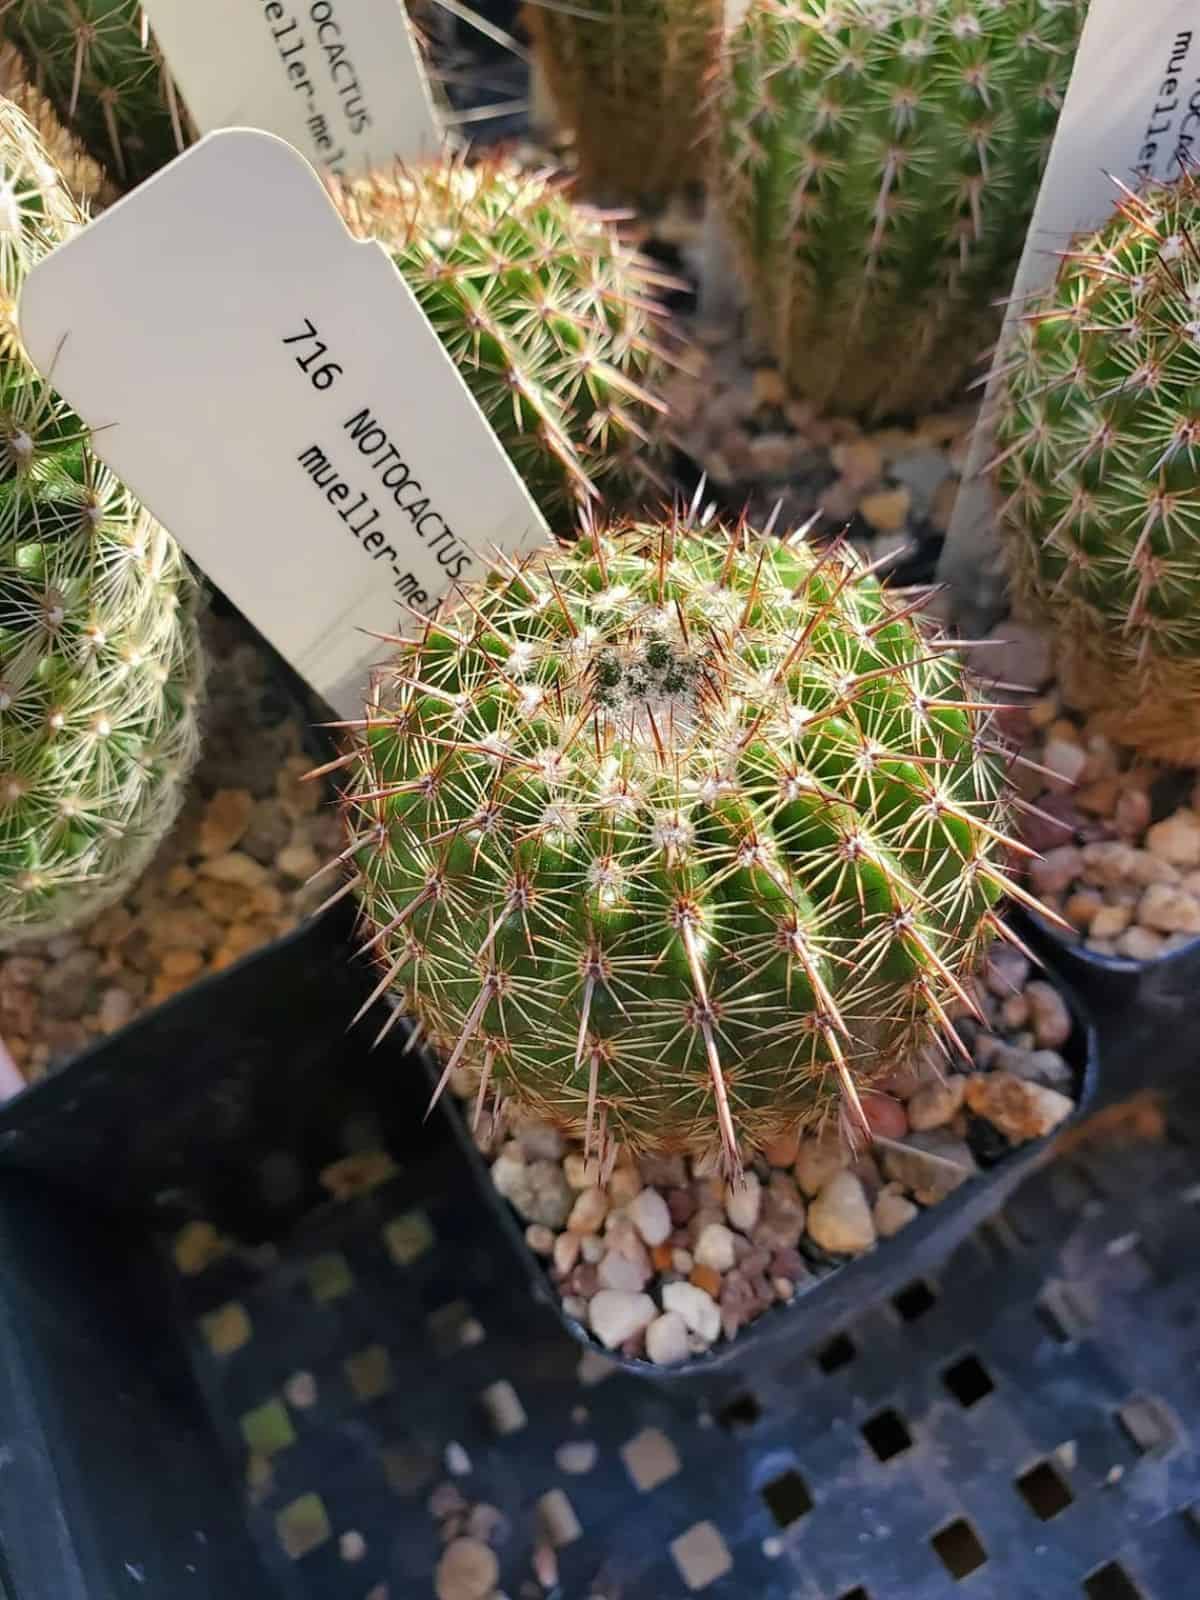 Parodia mueller-melchersii grows in a plastic pot.